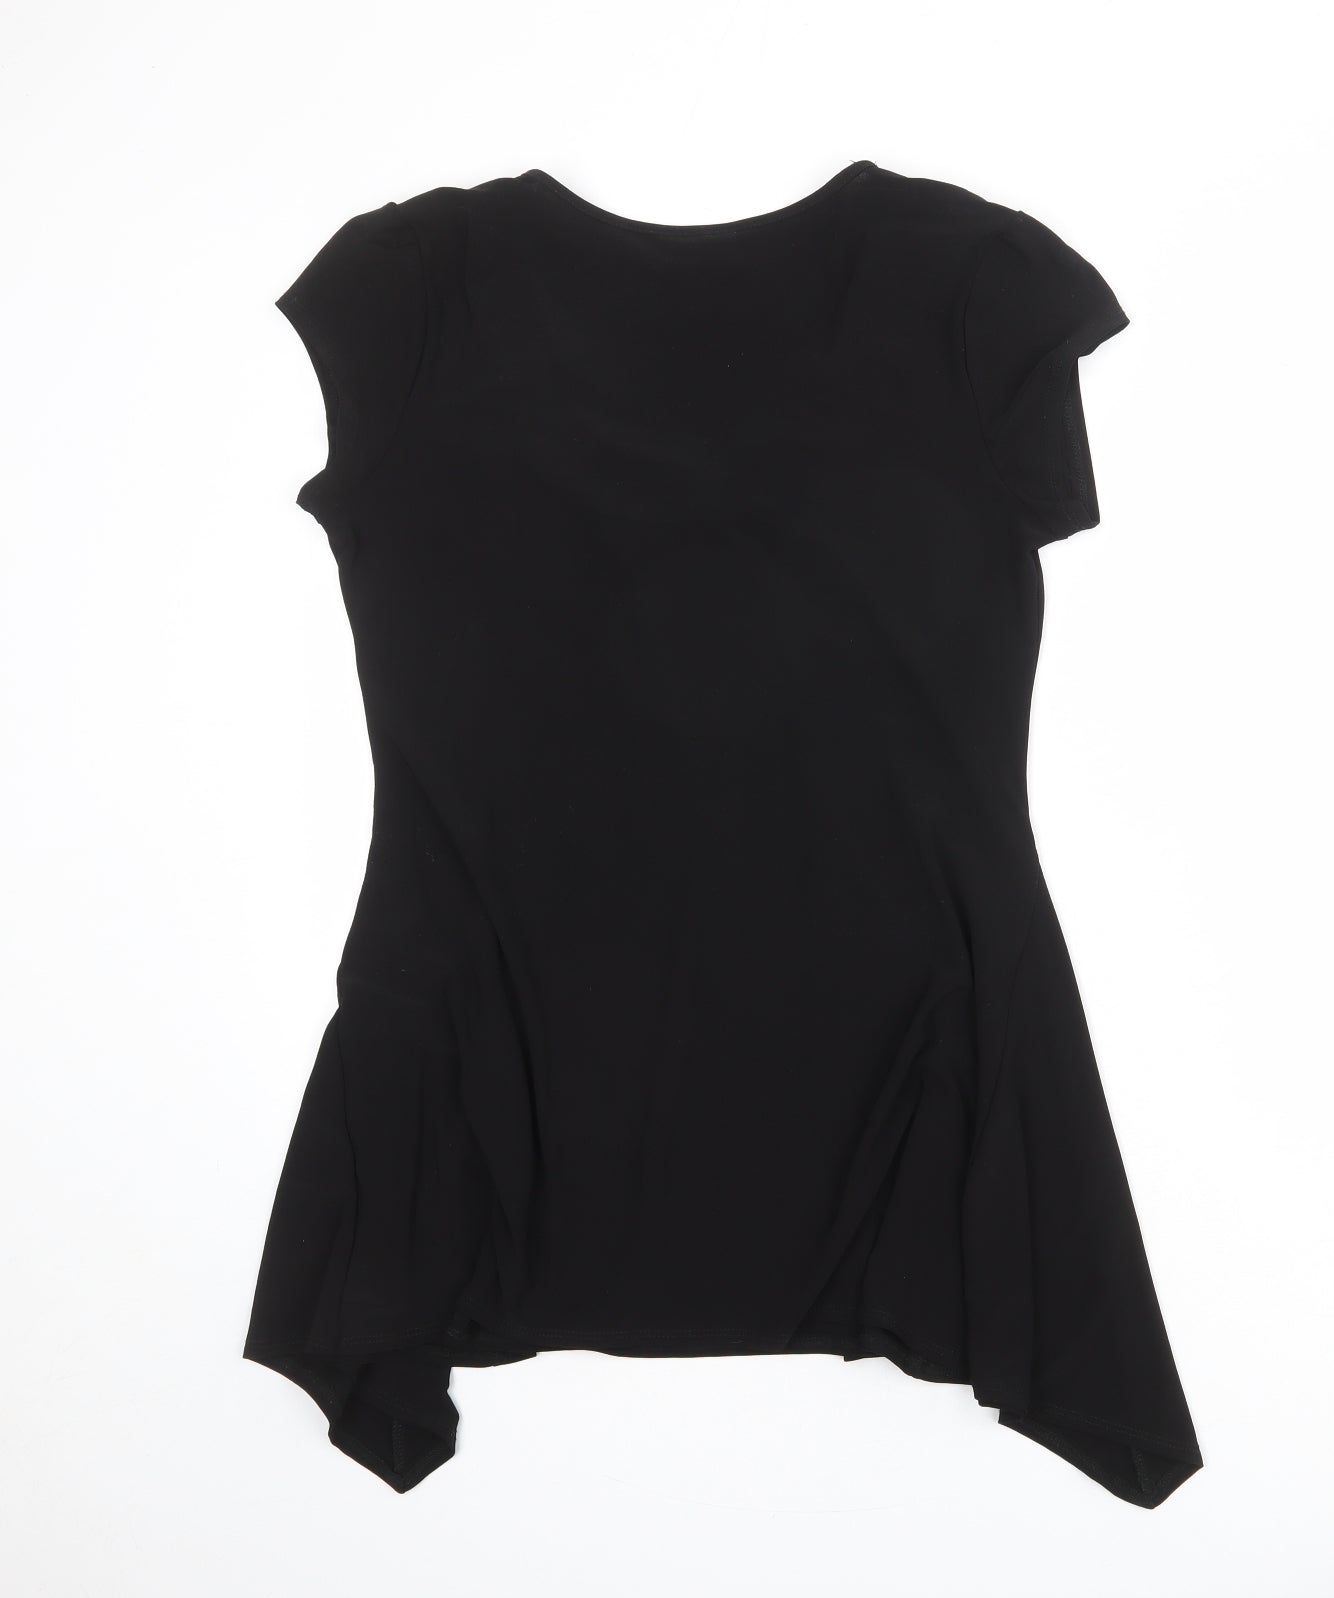 Wallis Womens Black Polyester Tunic Blouse Size M Scoop Neck - Asymmetric